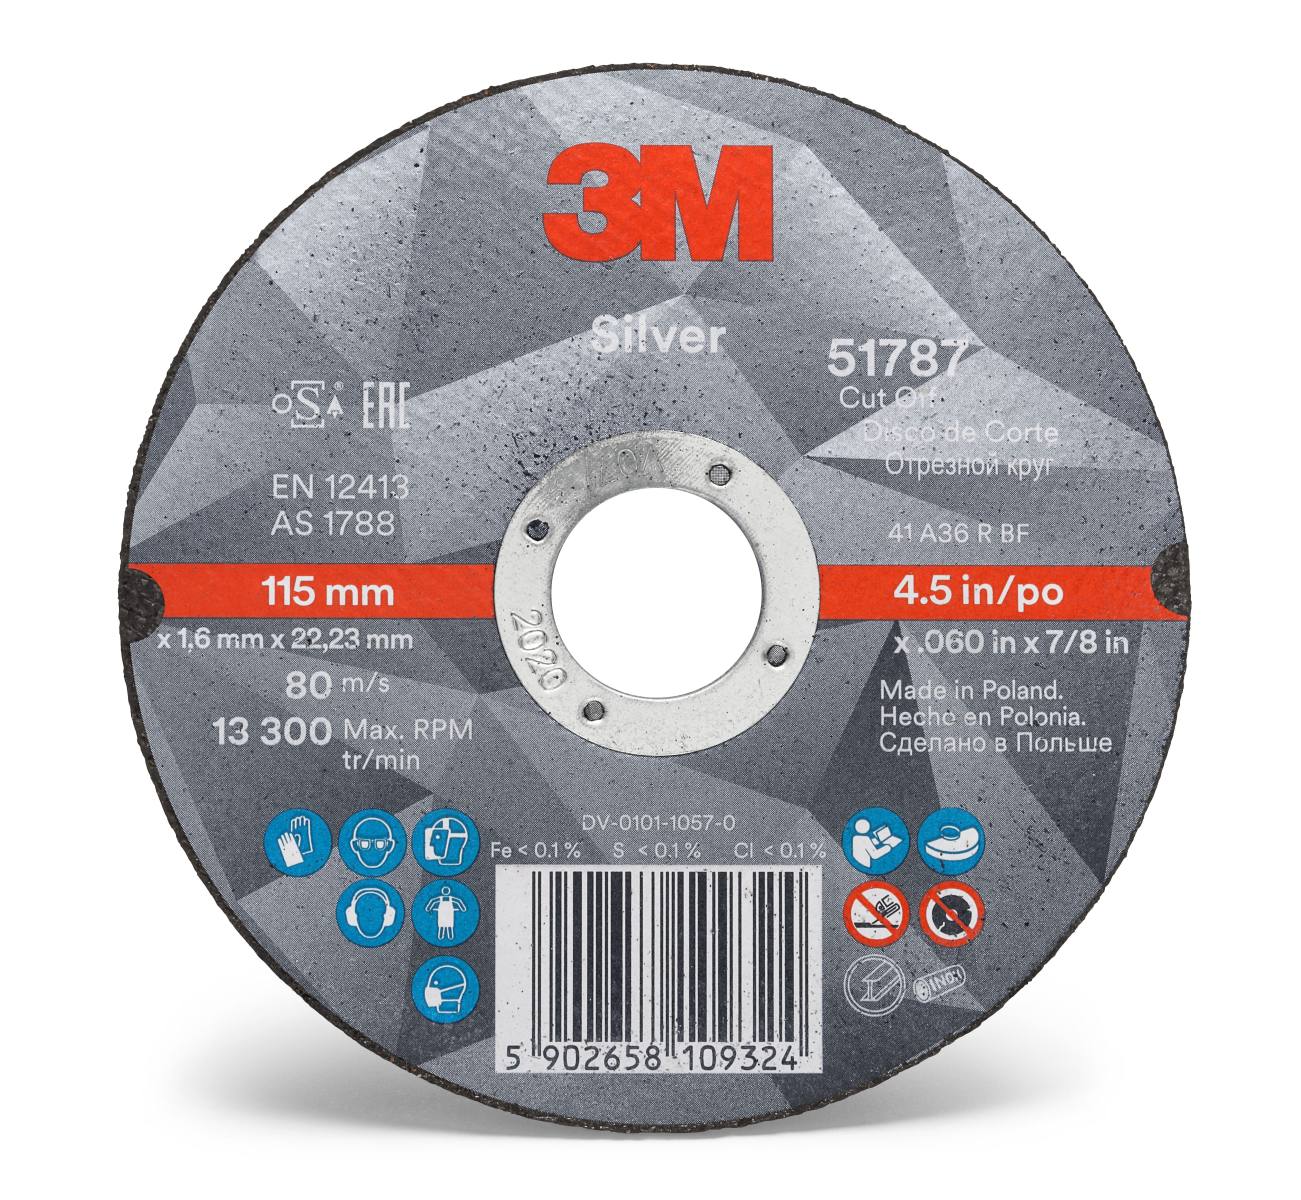 3M Silver Cut-Off Wheel Trennscheibe, 75 mm, 1,0 mm, 10 mm, T41, 51767